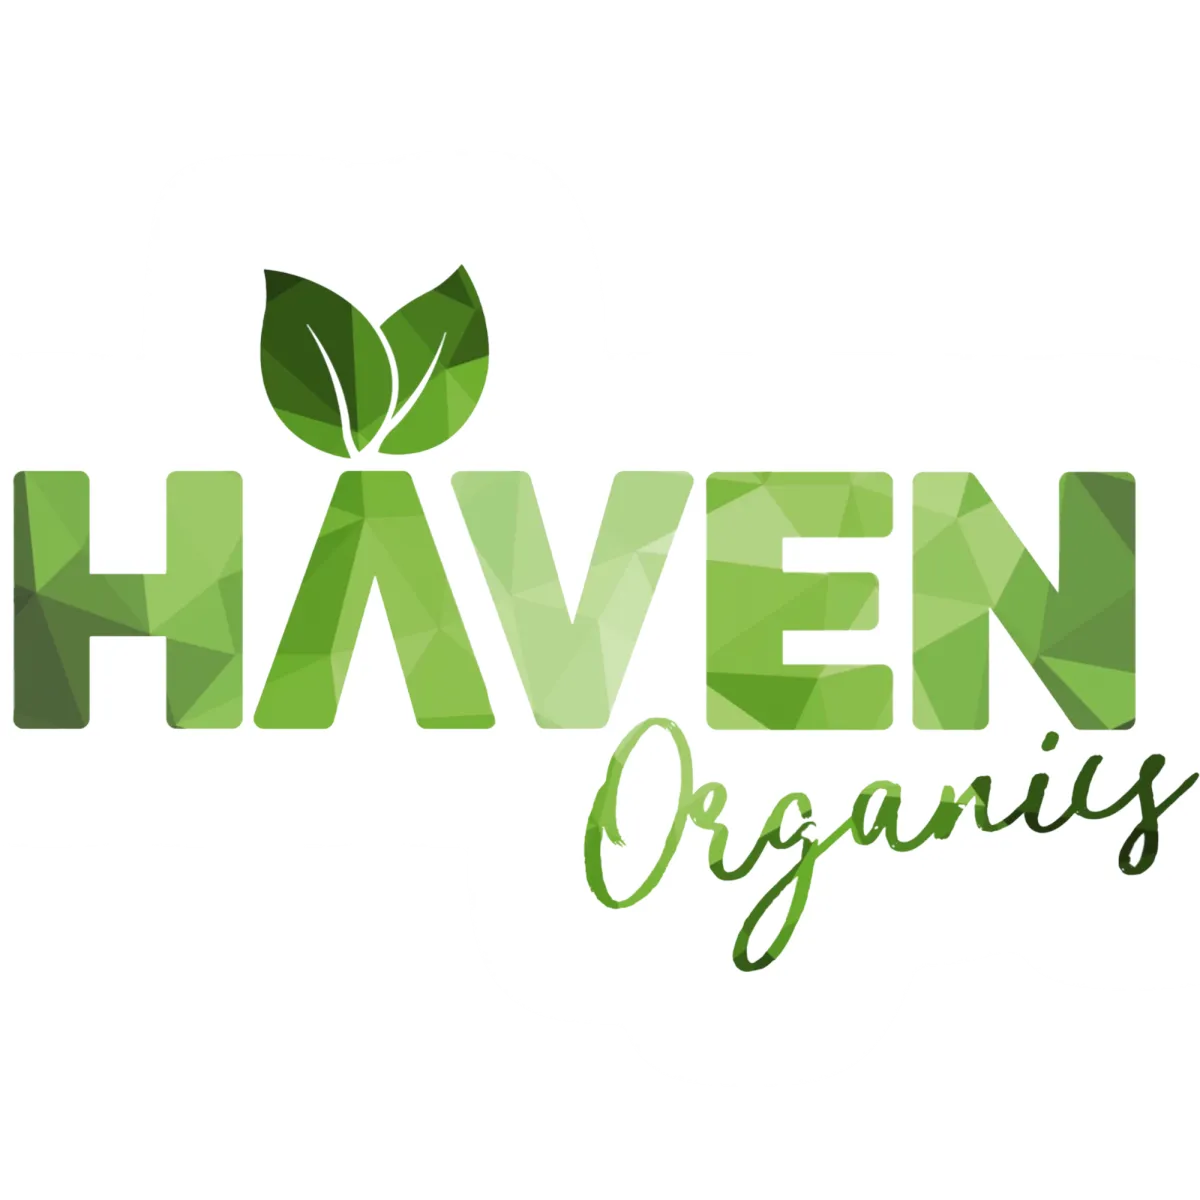 Heather Havenwood - Haven Organics